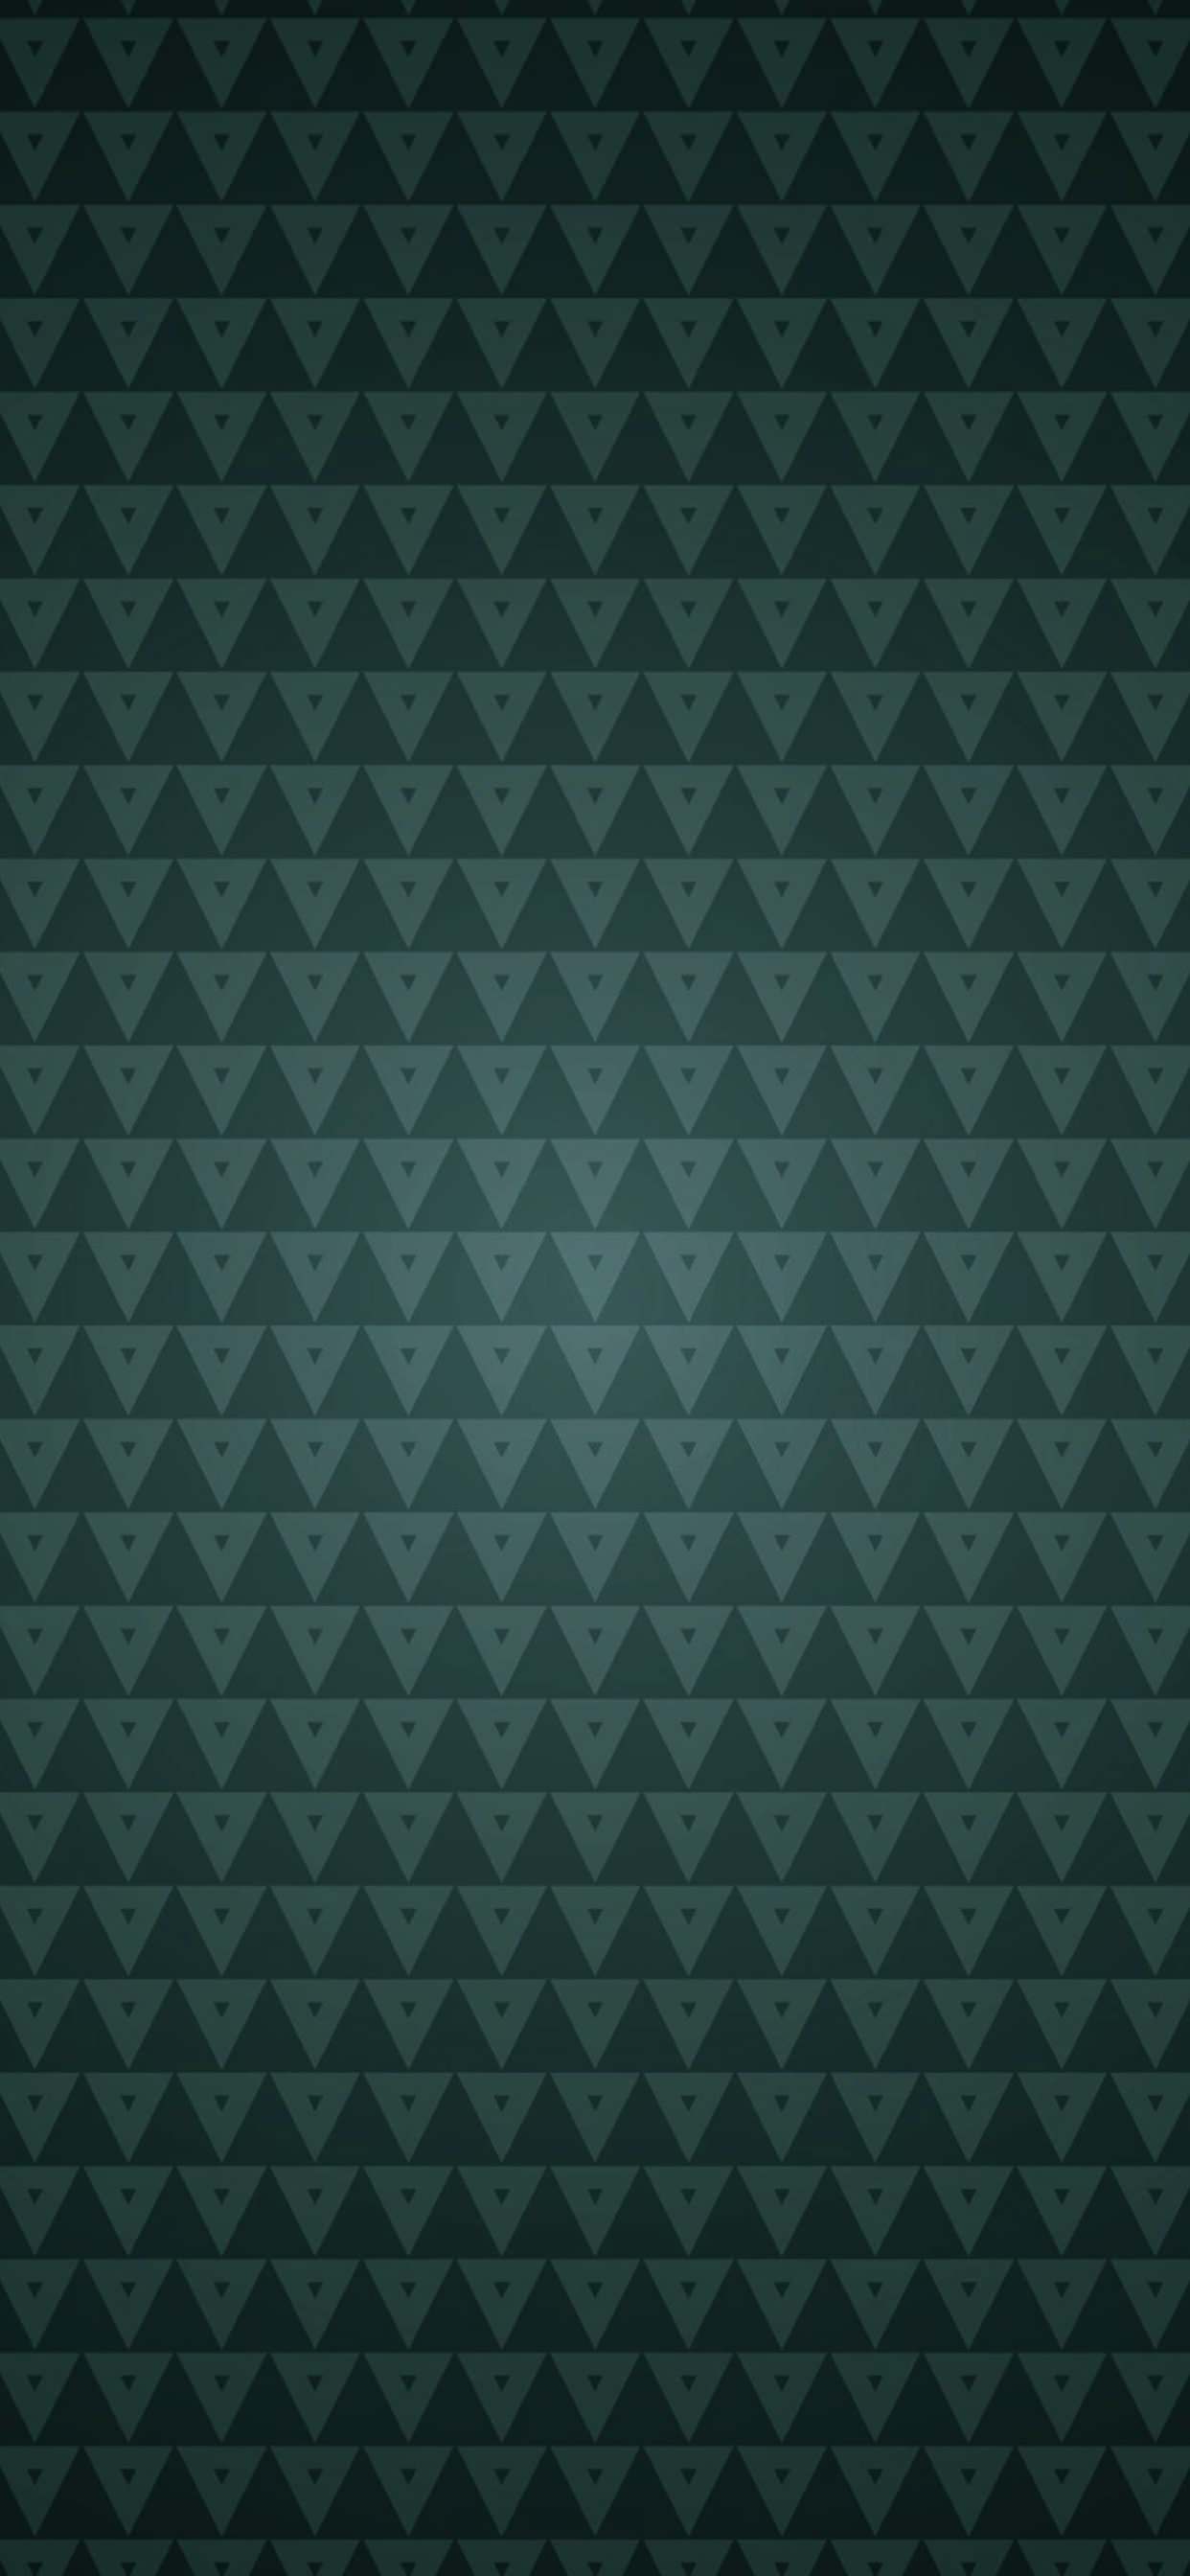 iPhone XS Max wallpaper